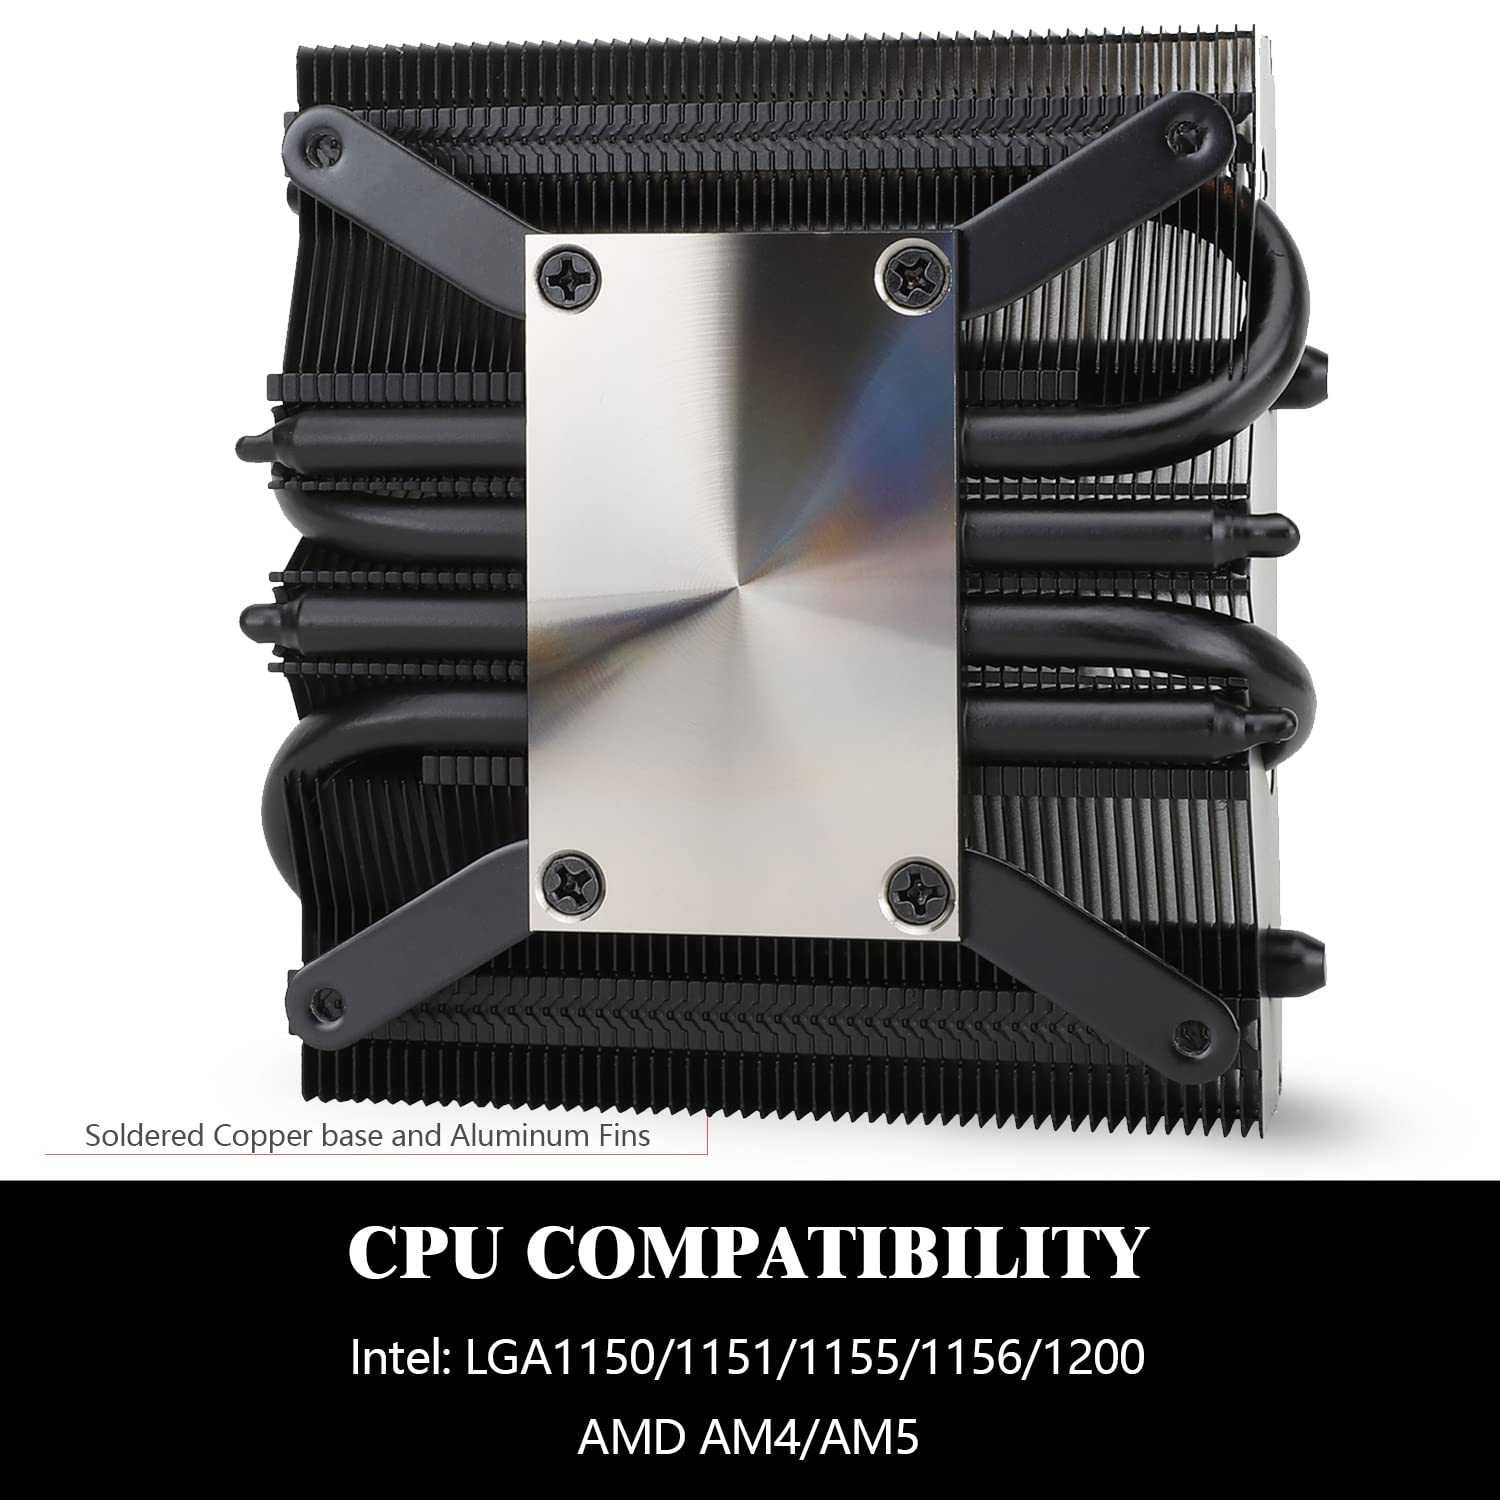 Cooler Ventilator Aer CPU Thermalright AXP90-X53,PWM,AGHP,AMD Intel